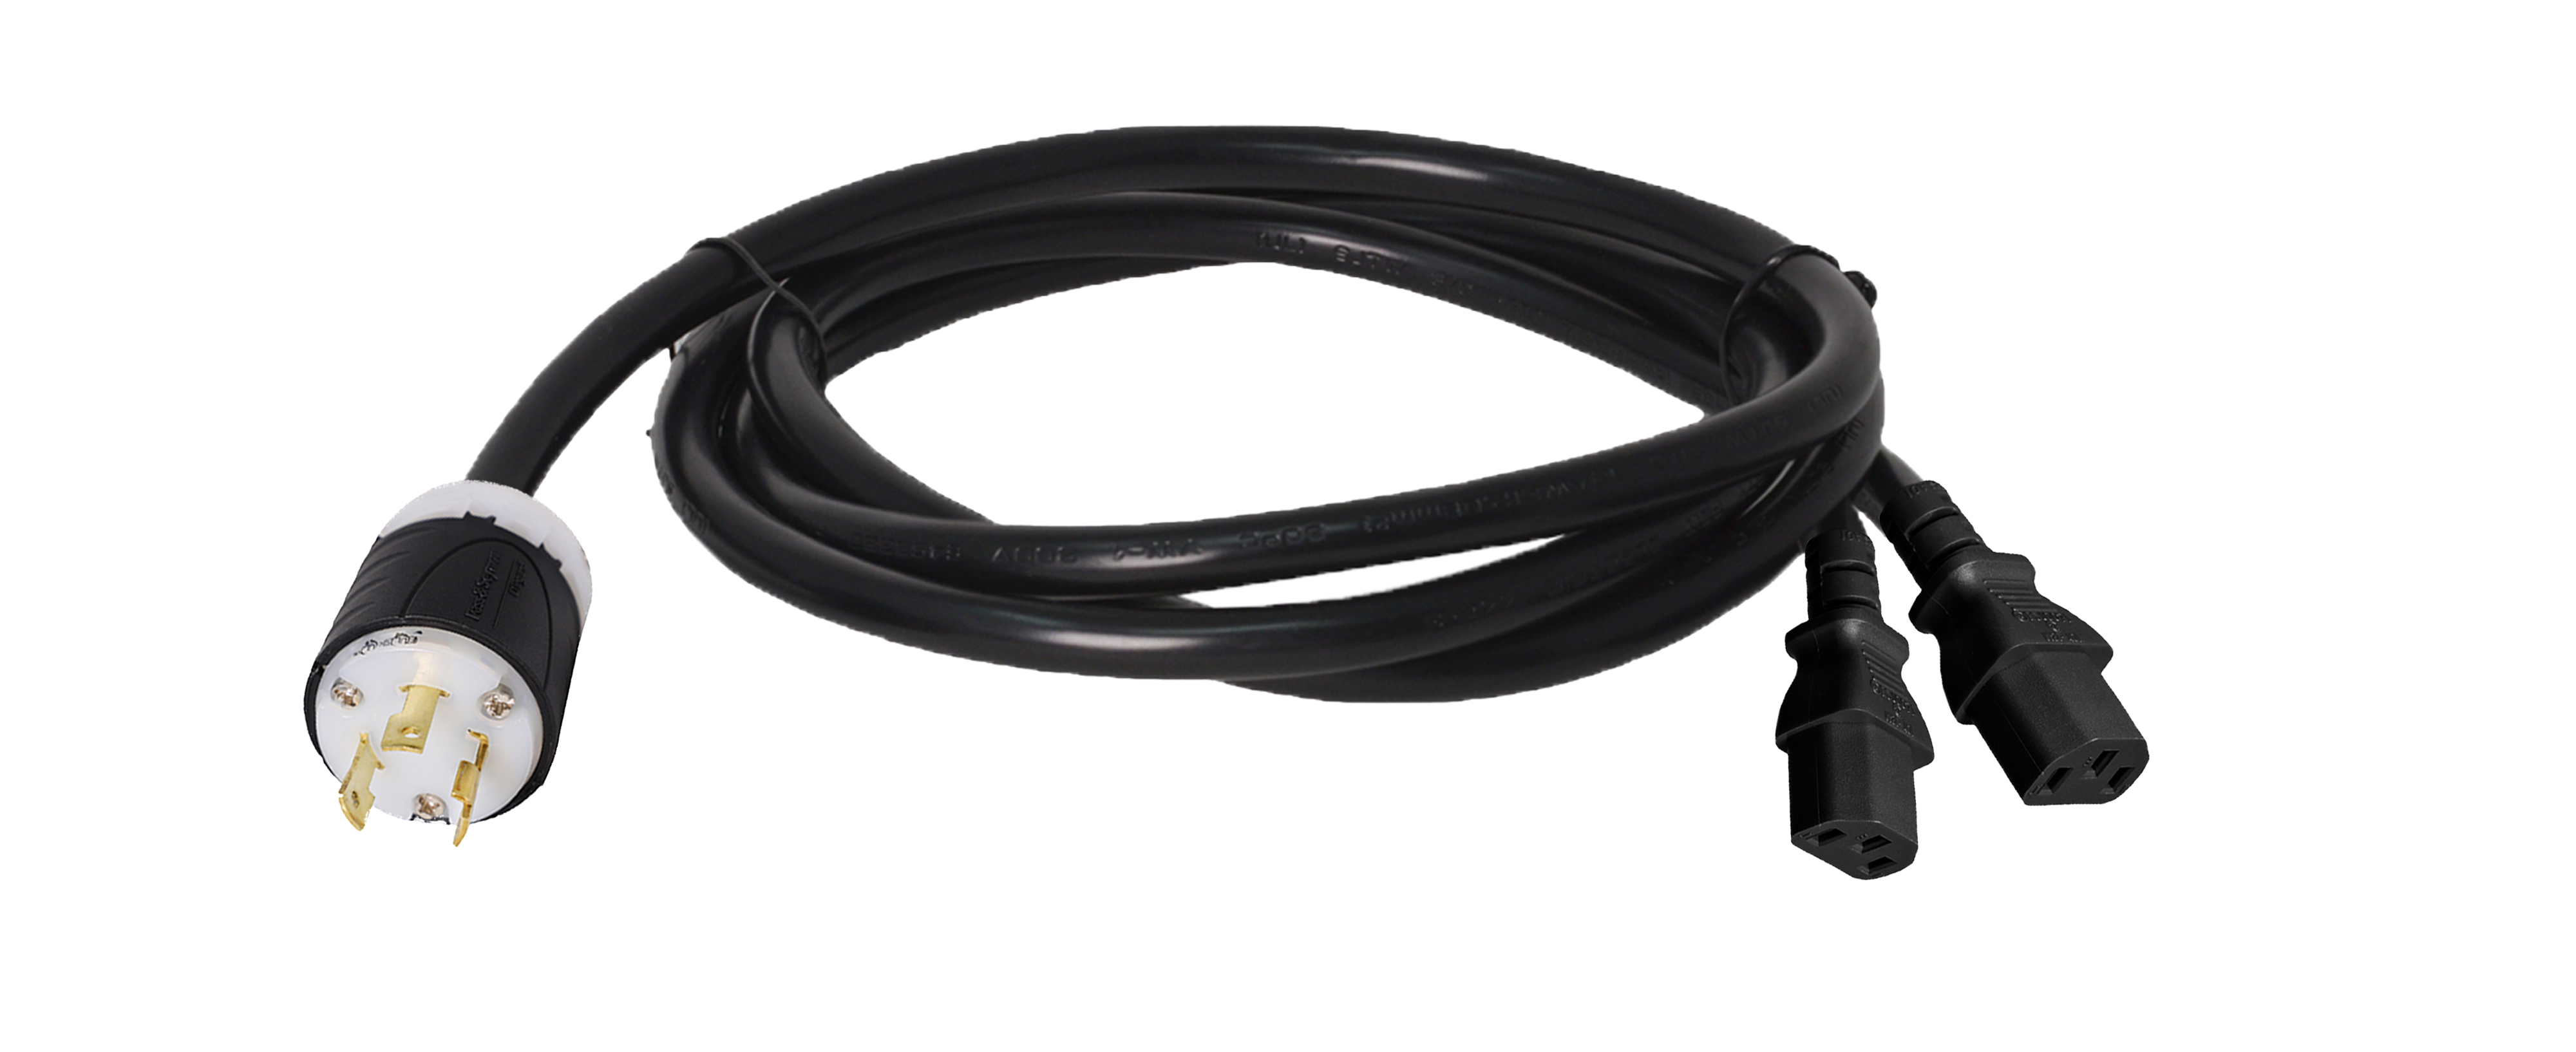 splitter power cord, l5-30 c13